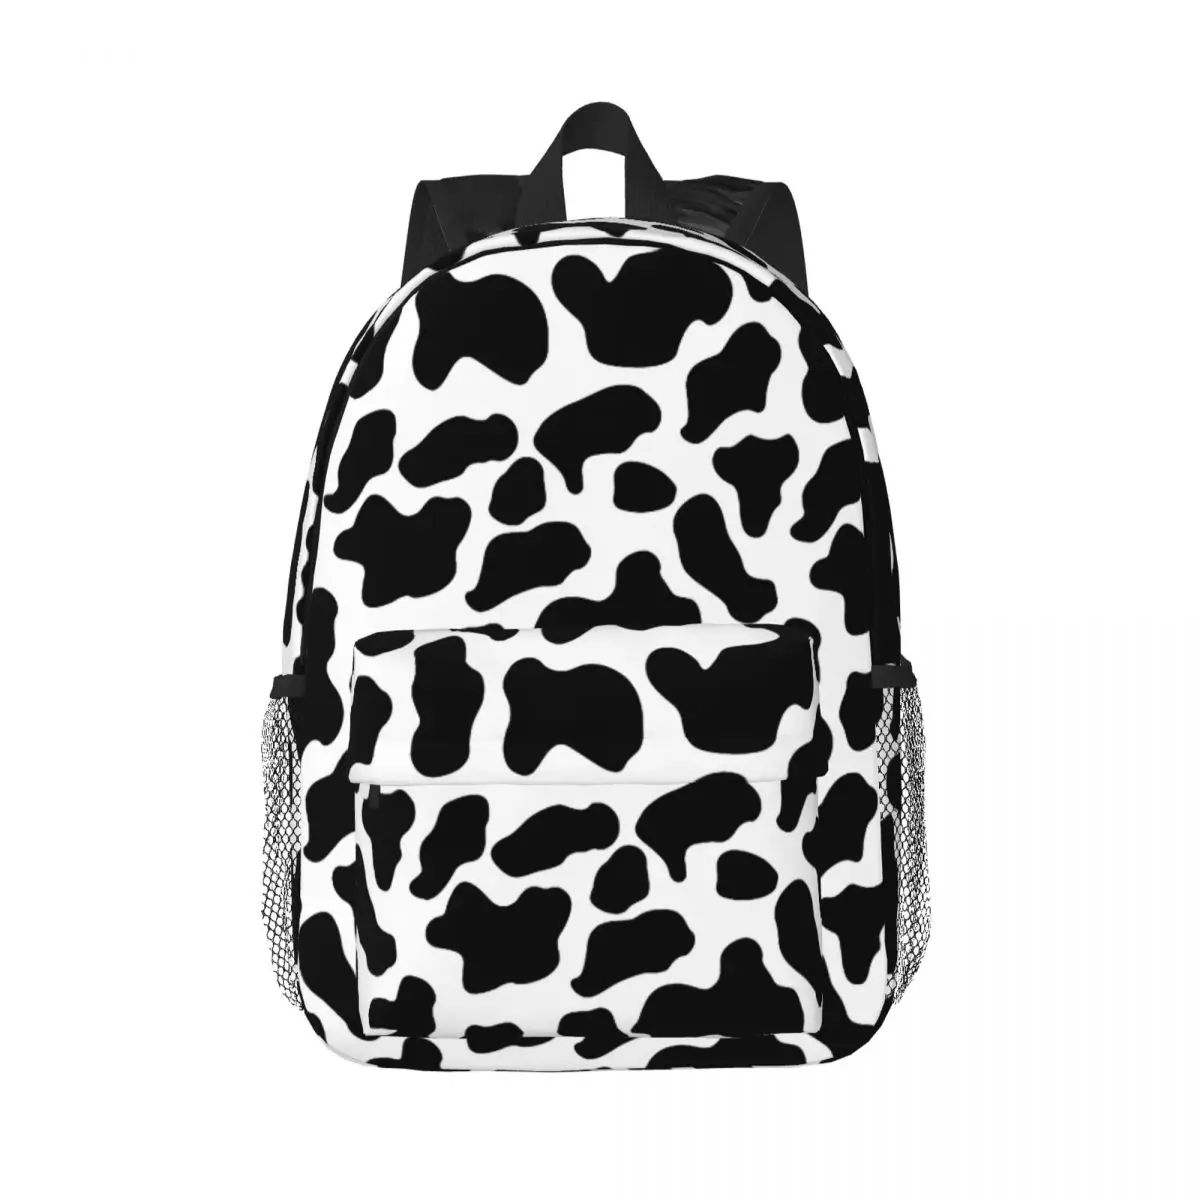 

Cowboy Cow Pattern Backpacks for Women Men College School Students Bookbag Fits 15 Inch Laptop Animal Fur Skin Texture Bags